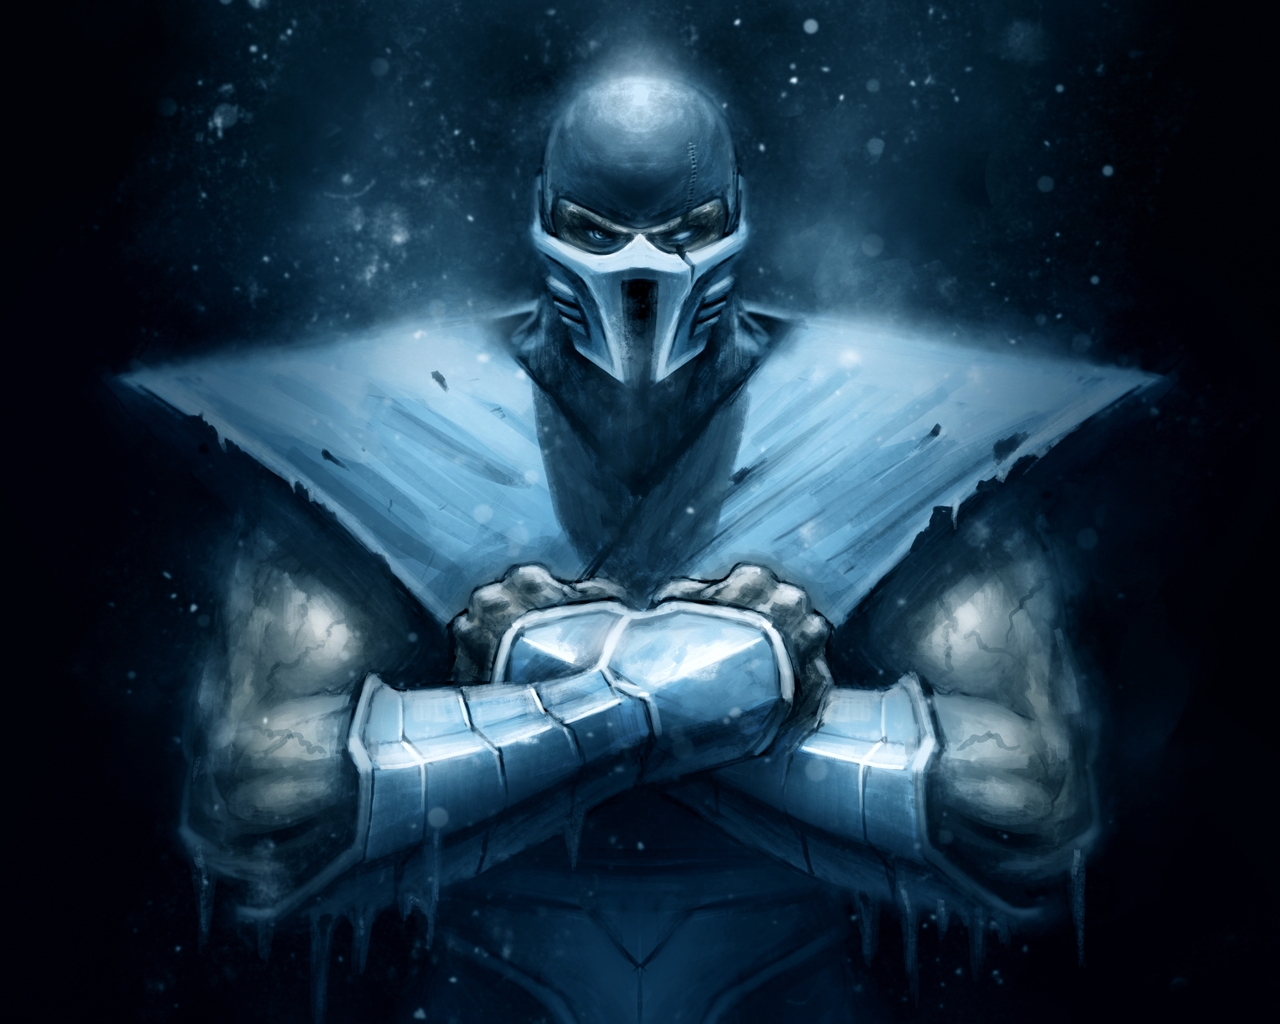 Image: Sub-Zero, fighter, Mortal Kombat, art